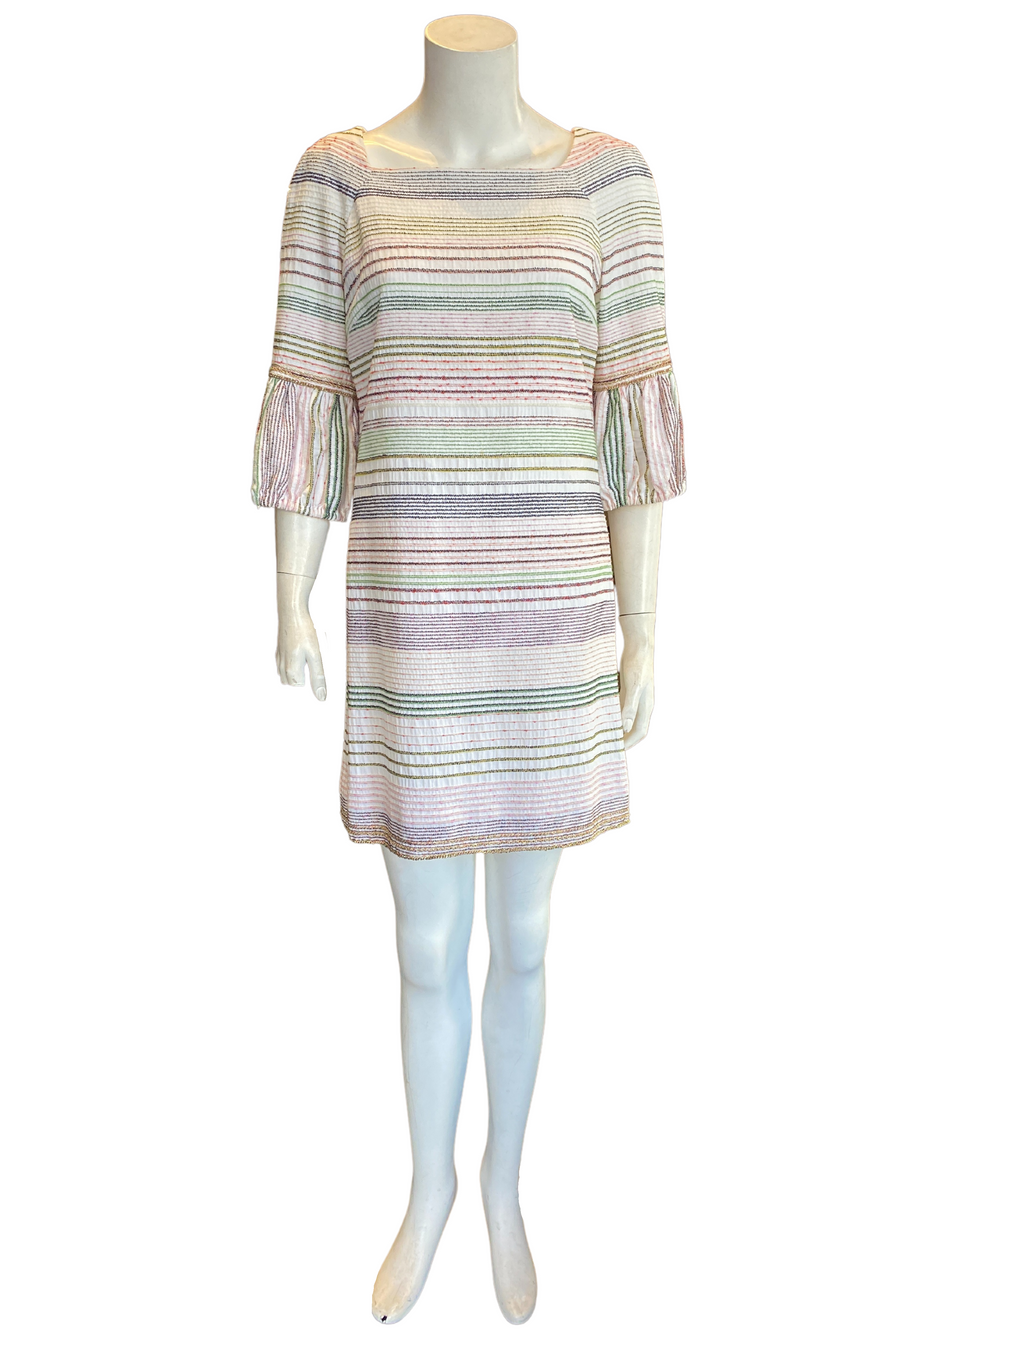 Chanel Spring '07 Cotton & Wool Shift Dress, M, FR38, US6